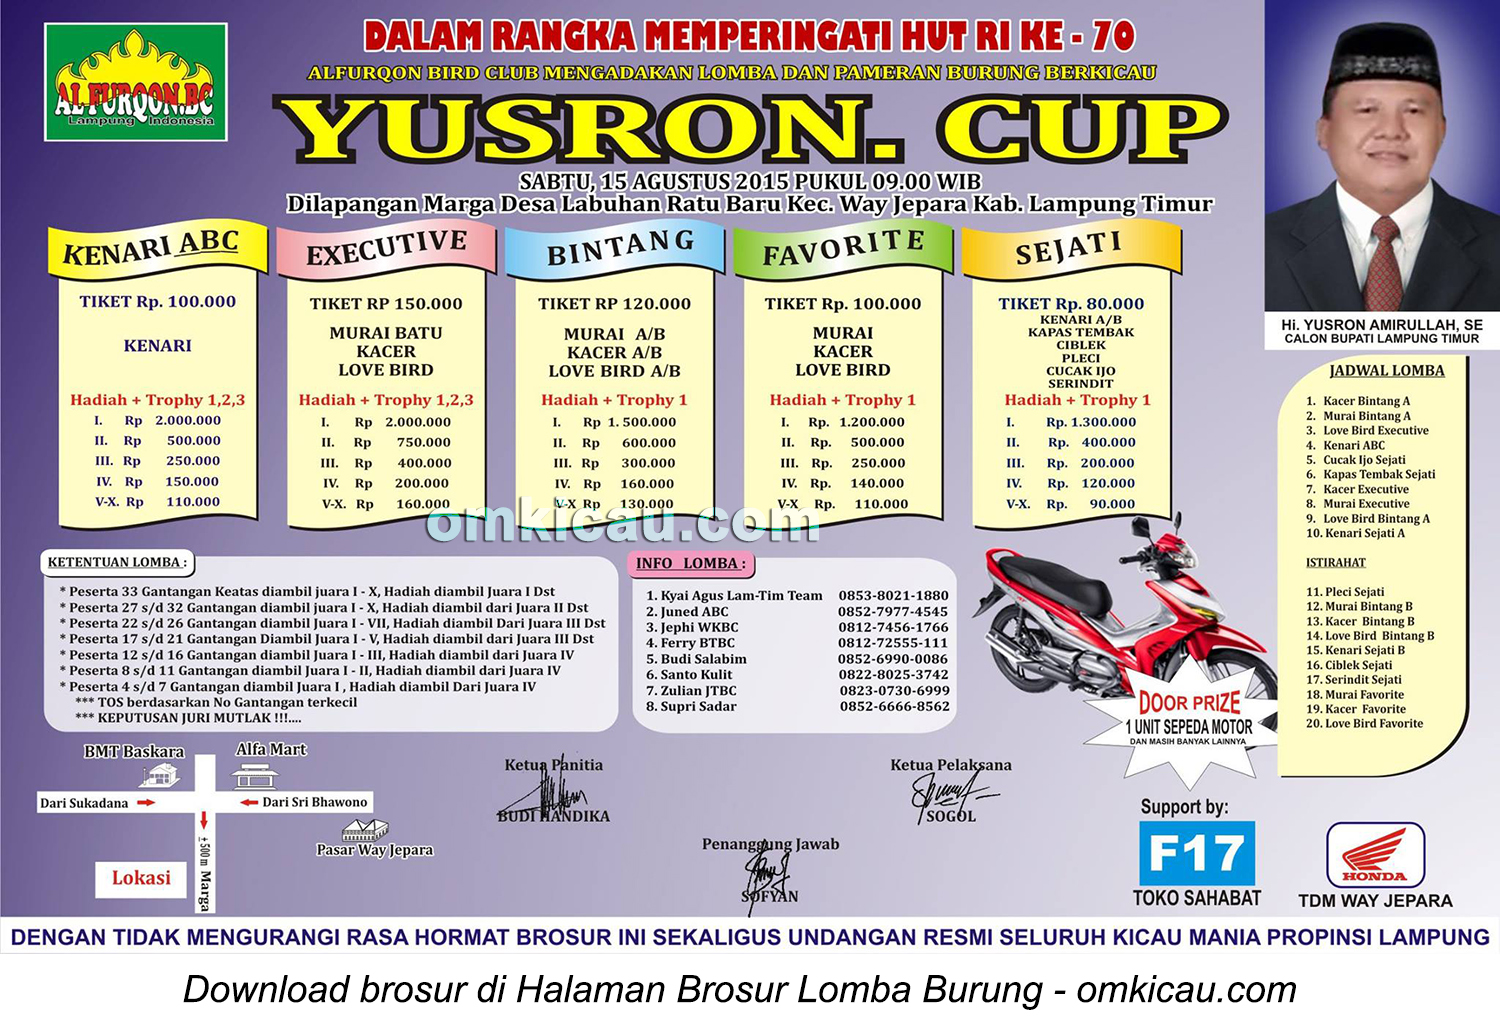 Brosur Lomba Burung Berkicau Yusron Cup, Lampung Timur, 15 Agustus 2015